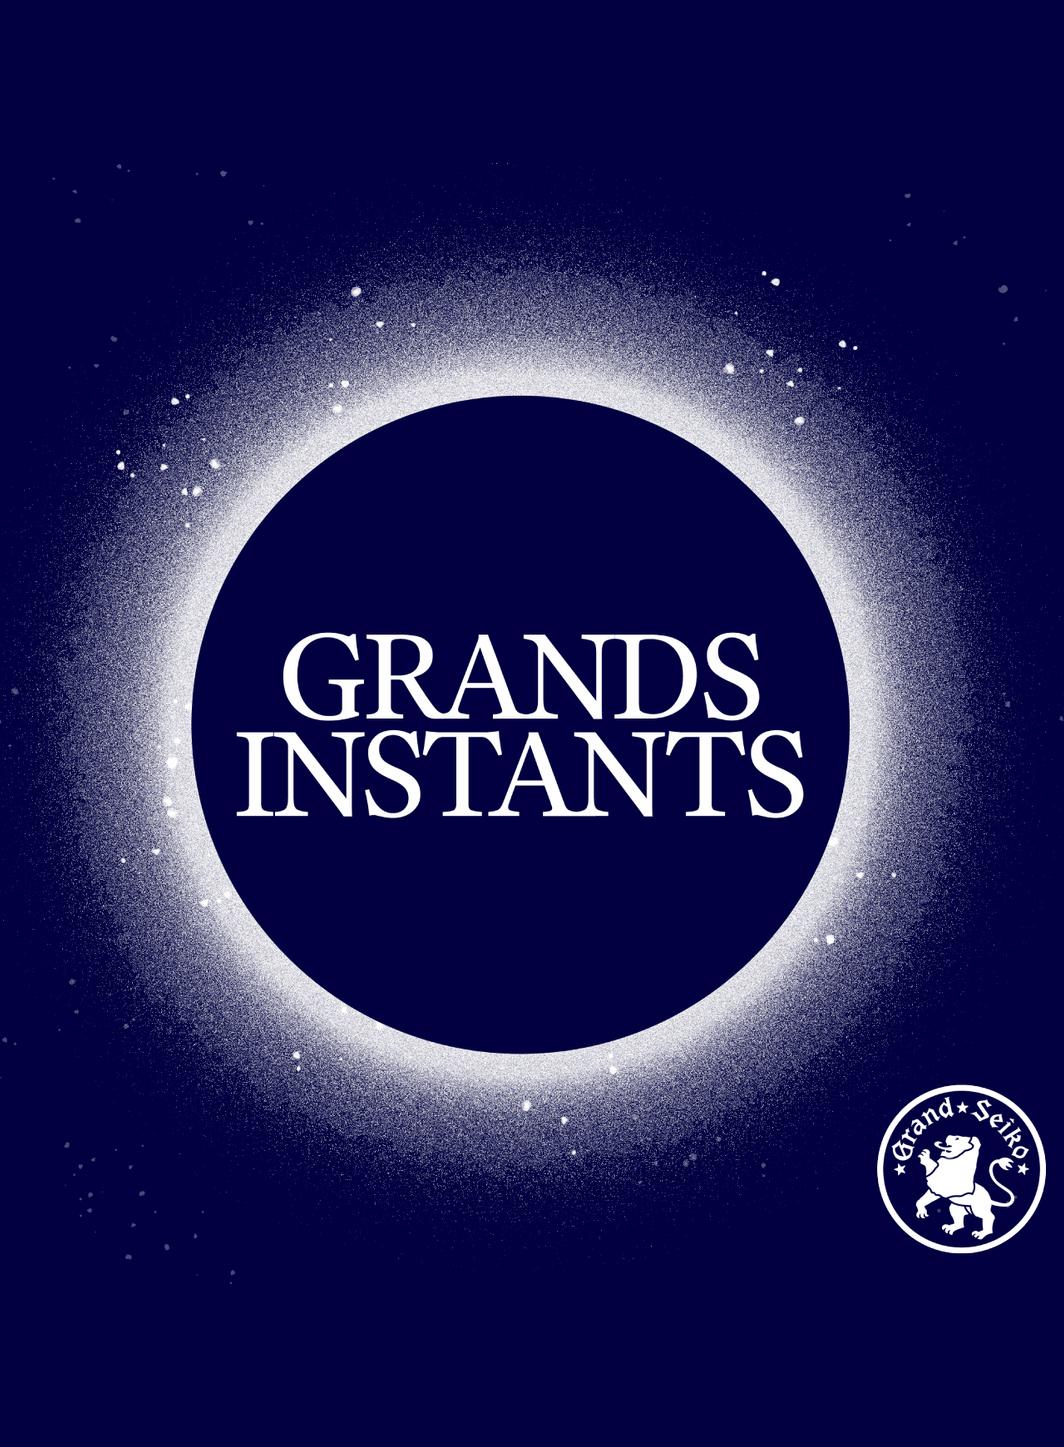 Grand Seiko lance "Grands Instants", son premier podcast.